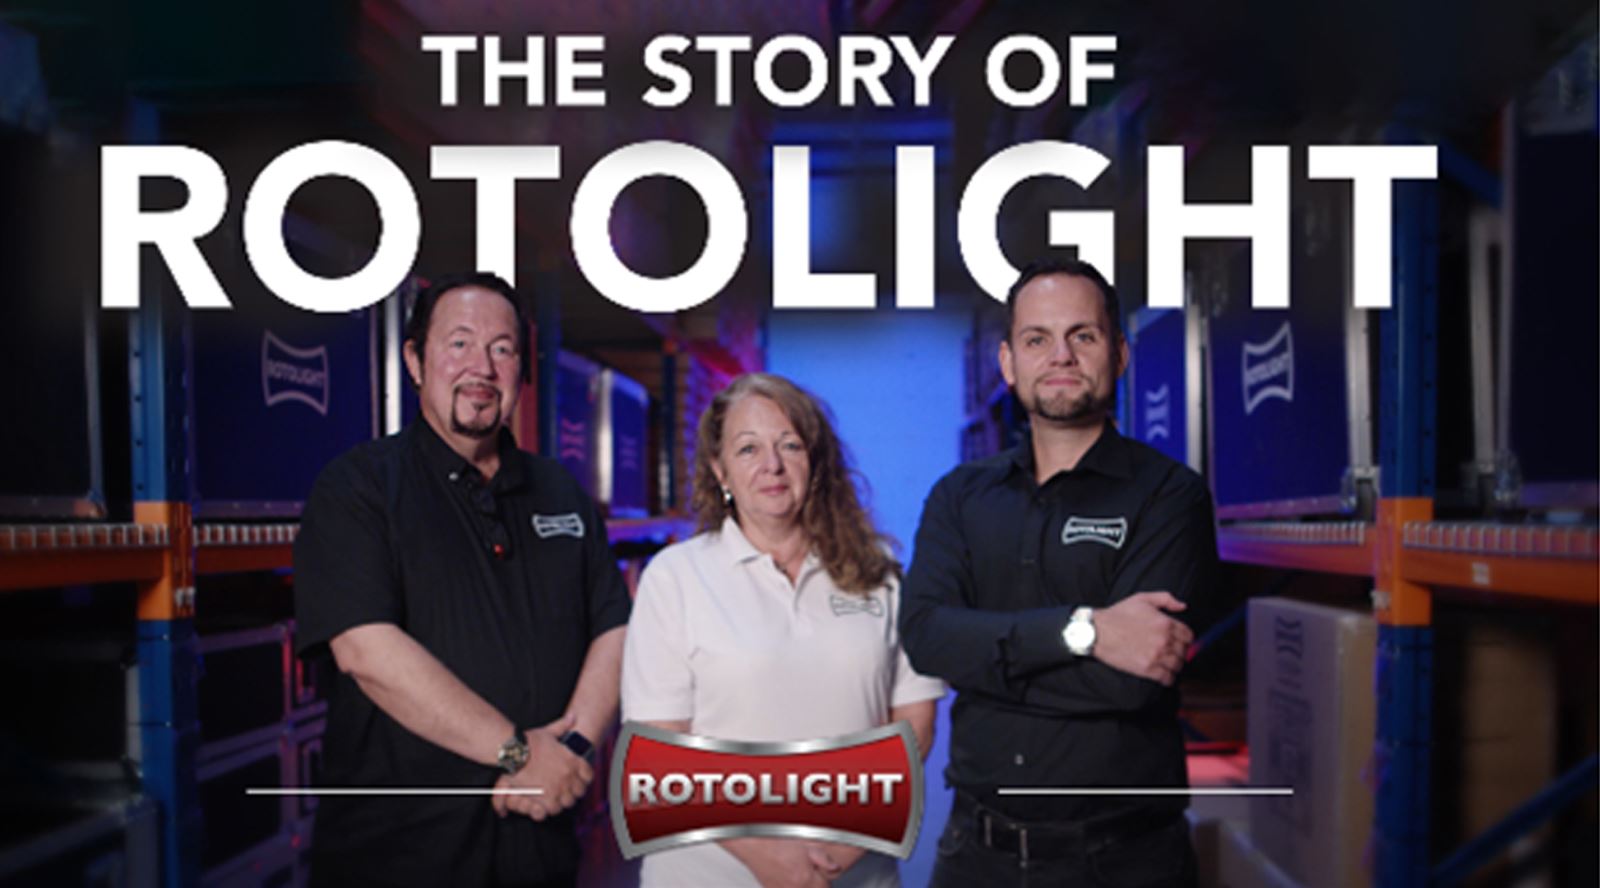 The story of Rotolight